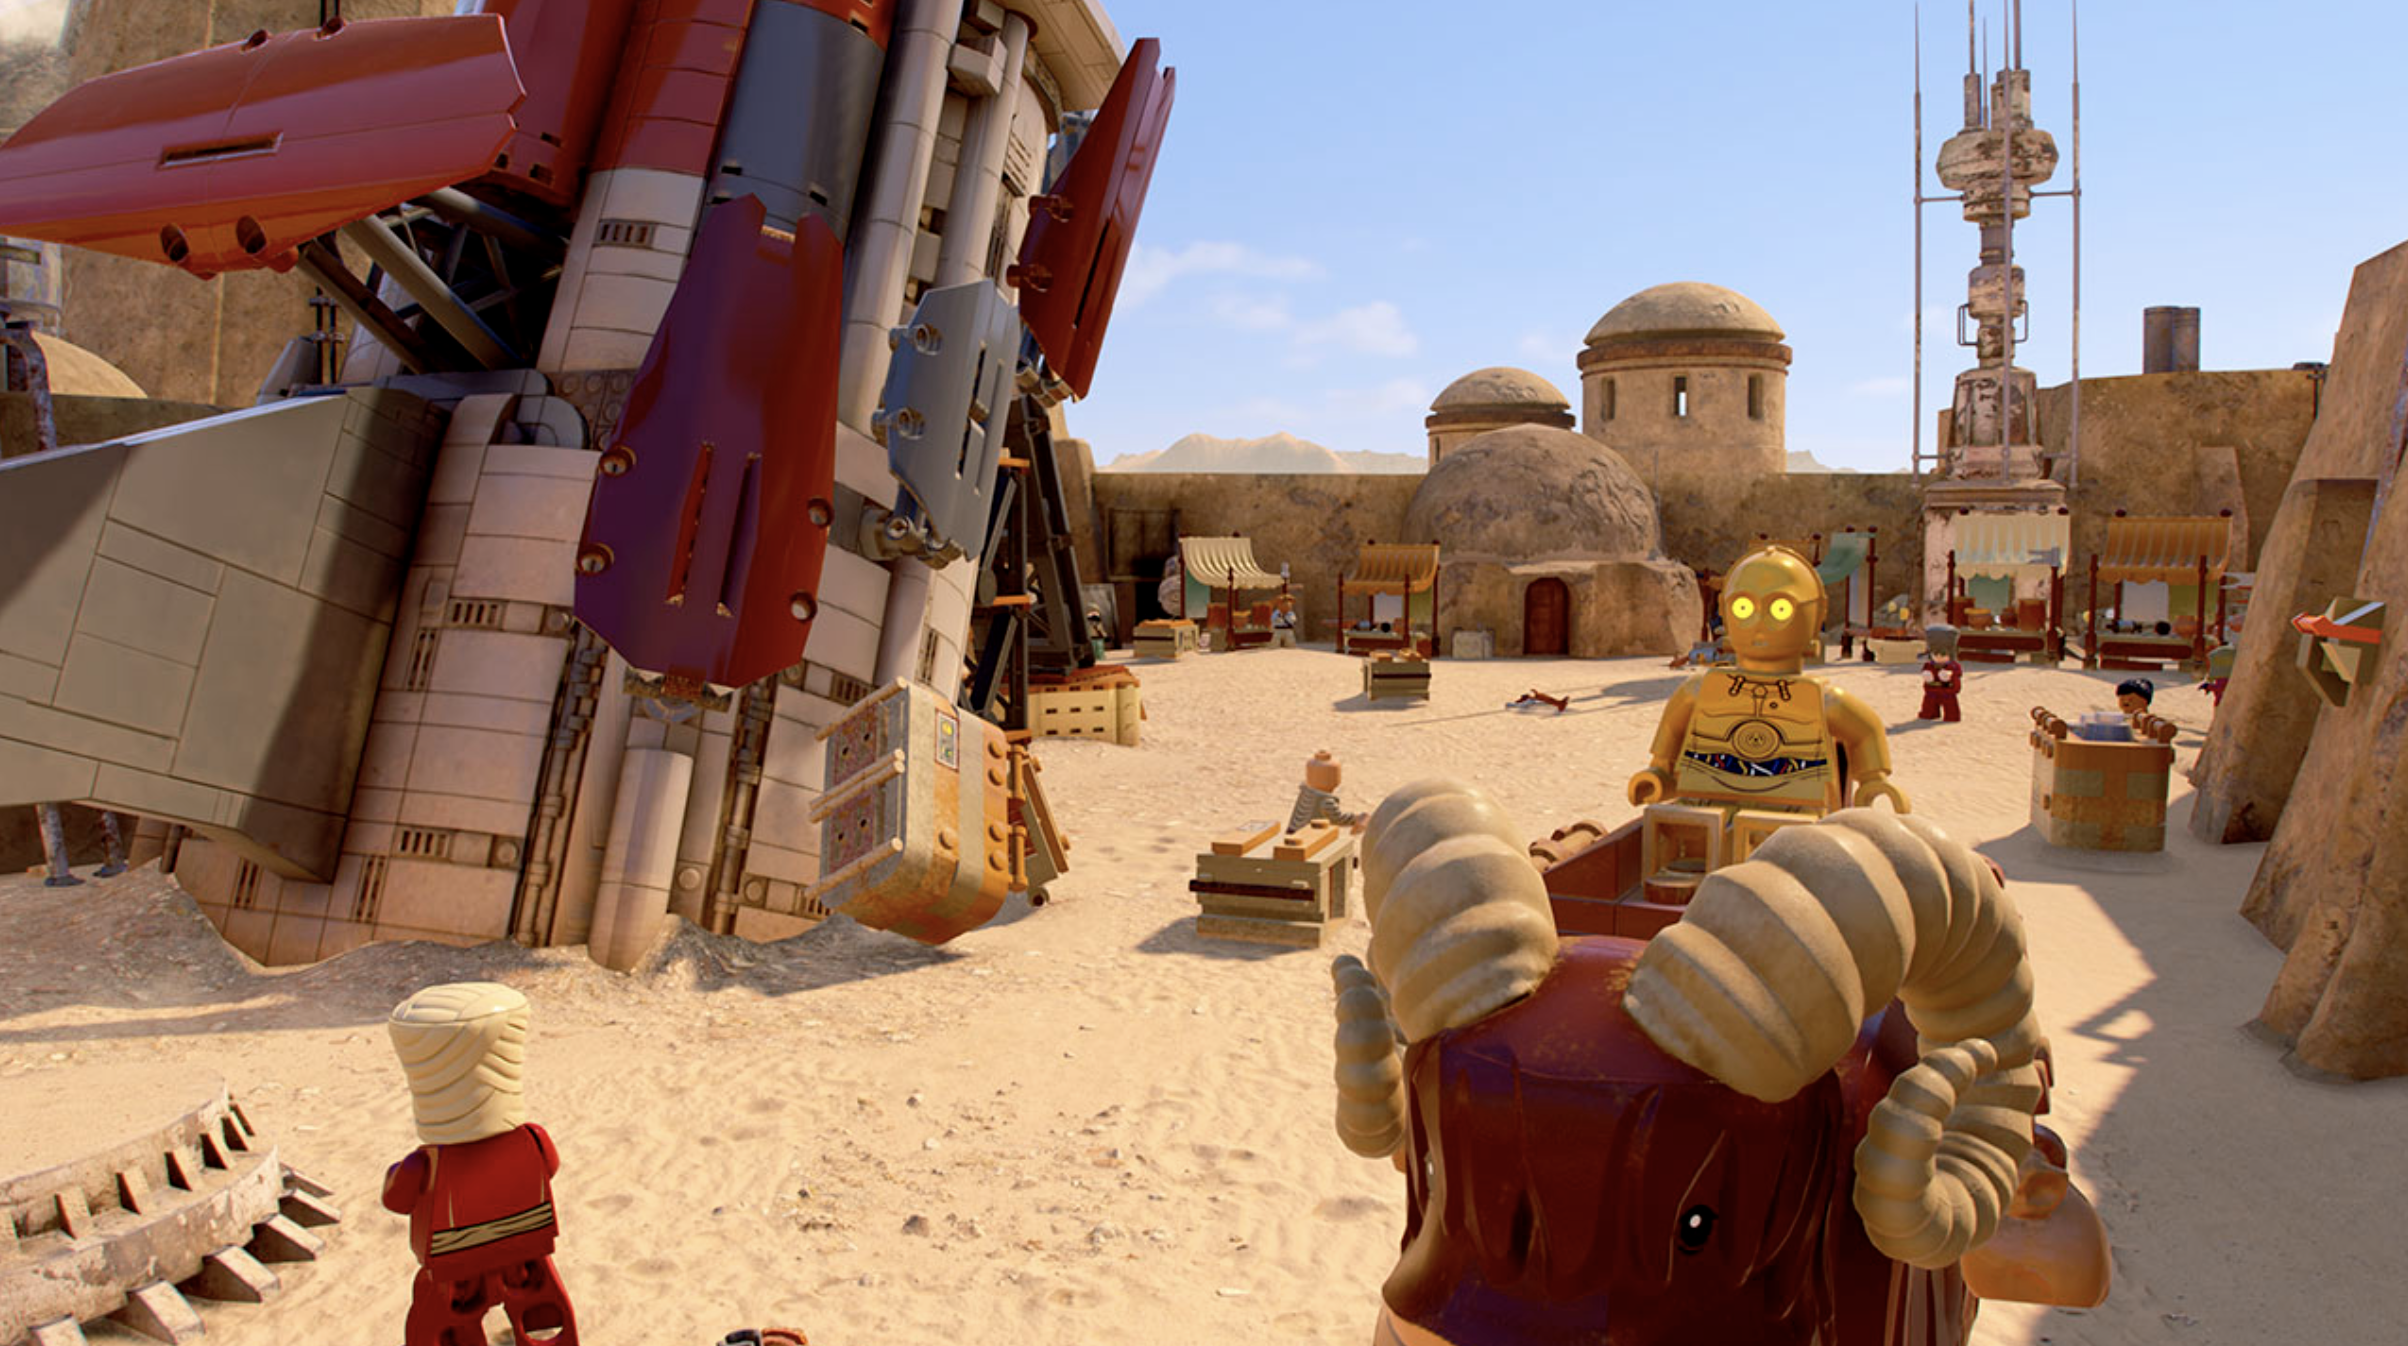 Lego Star Wars: The Skywalker Saga trailer still showing C-3PO on a Bantha